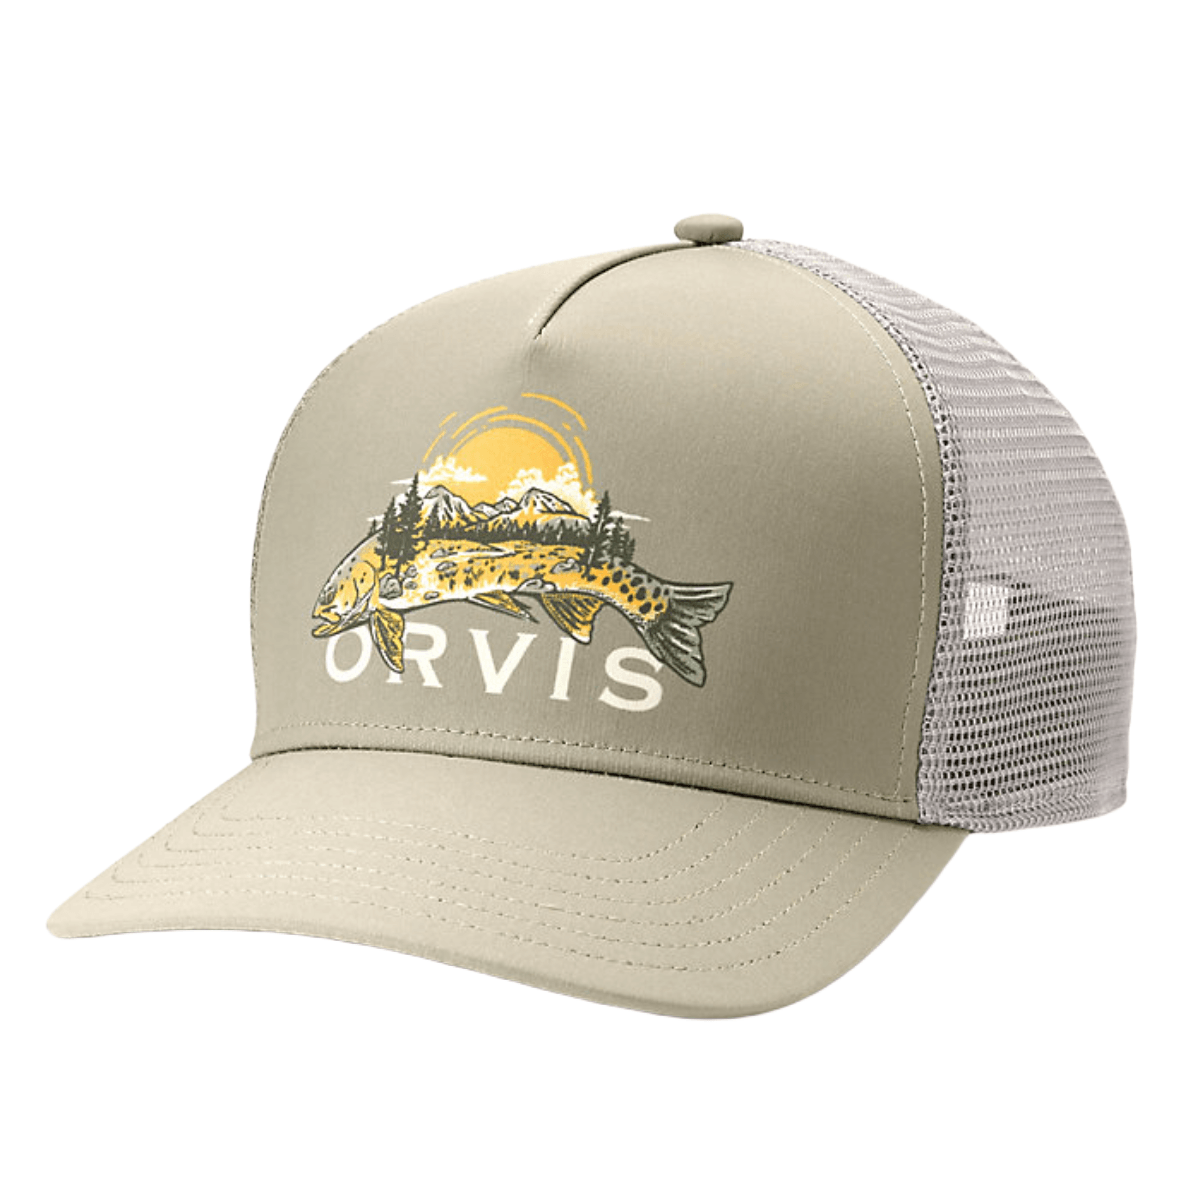 Orvis Trout Landscape Trucker Hat - Men's - Bobwards.com